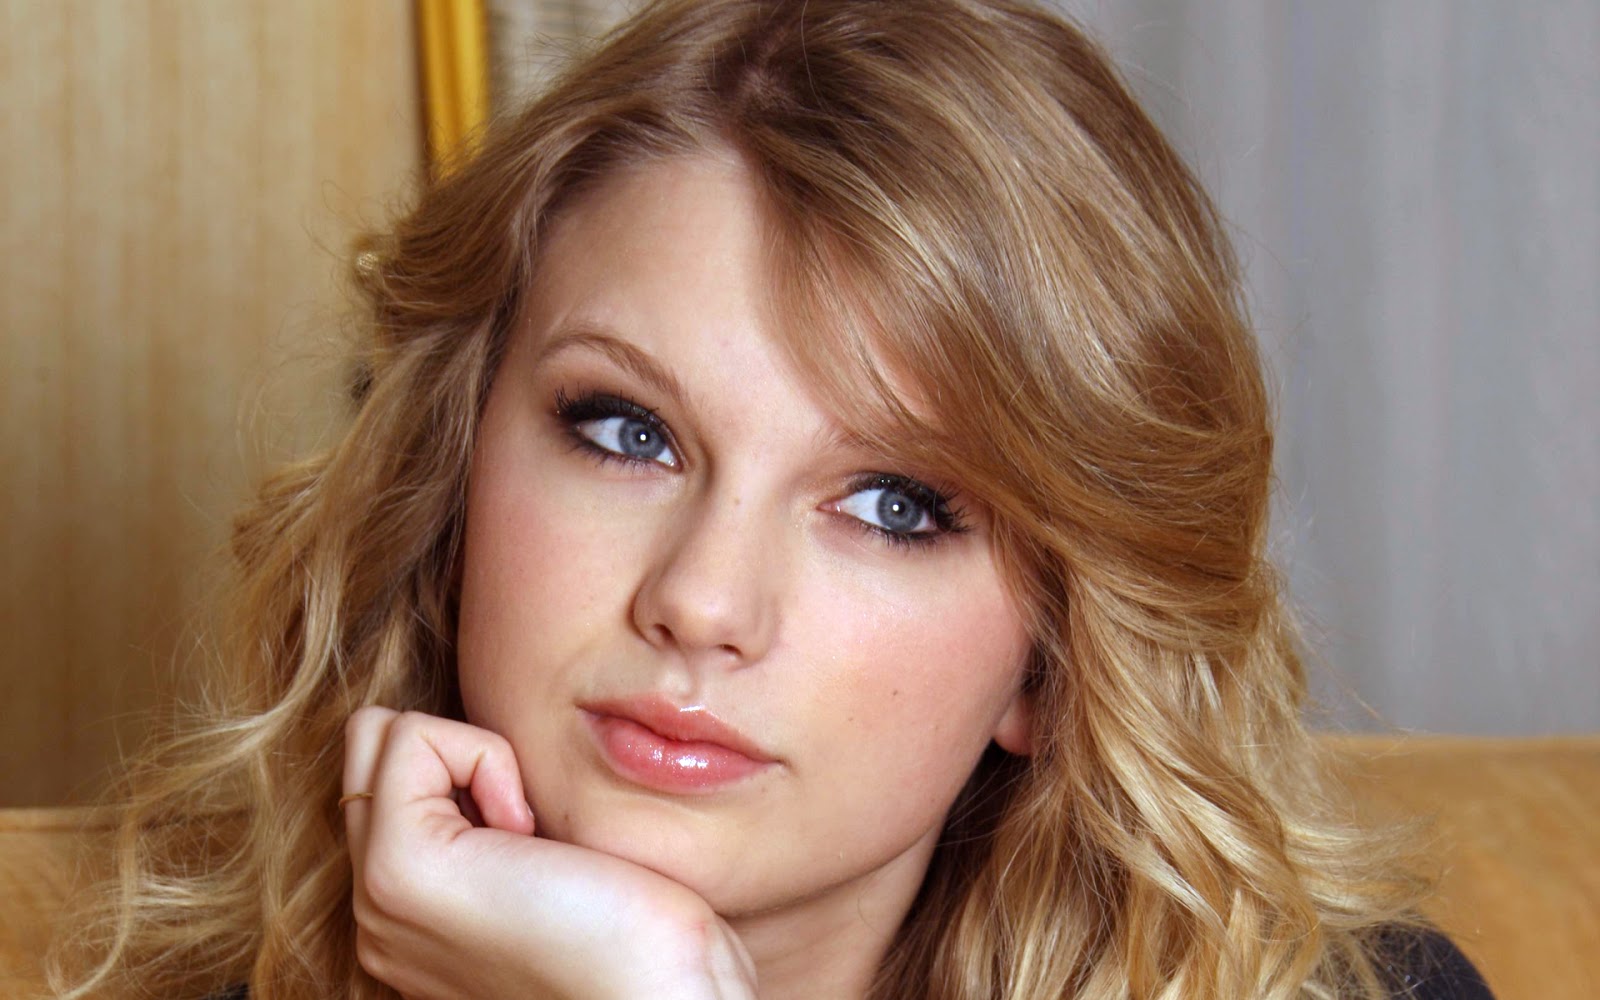 Taylor Swift Widescreen Wallpapers wallpapers55.com - Best